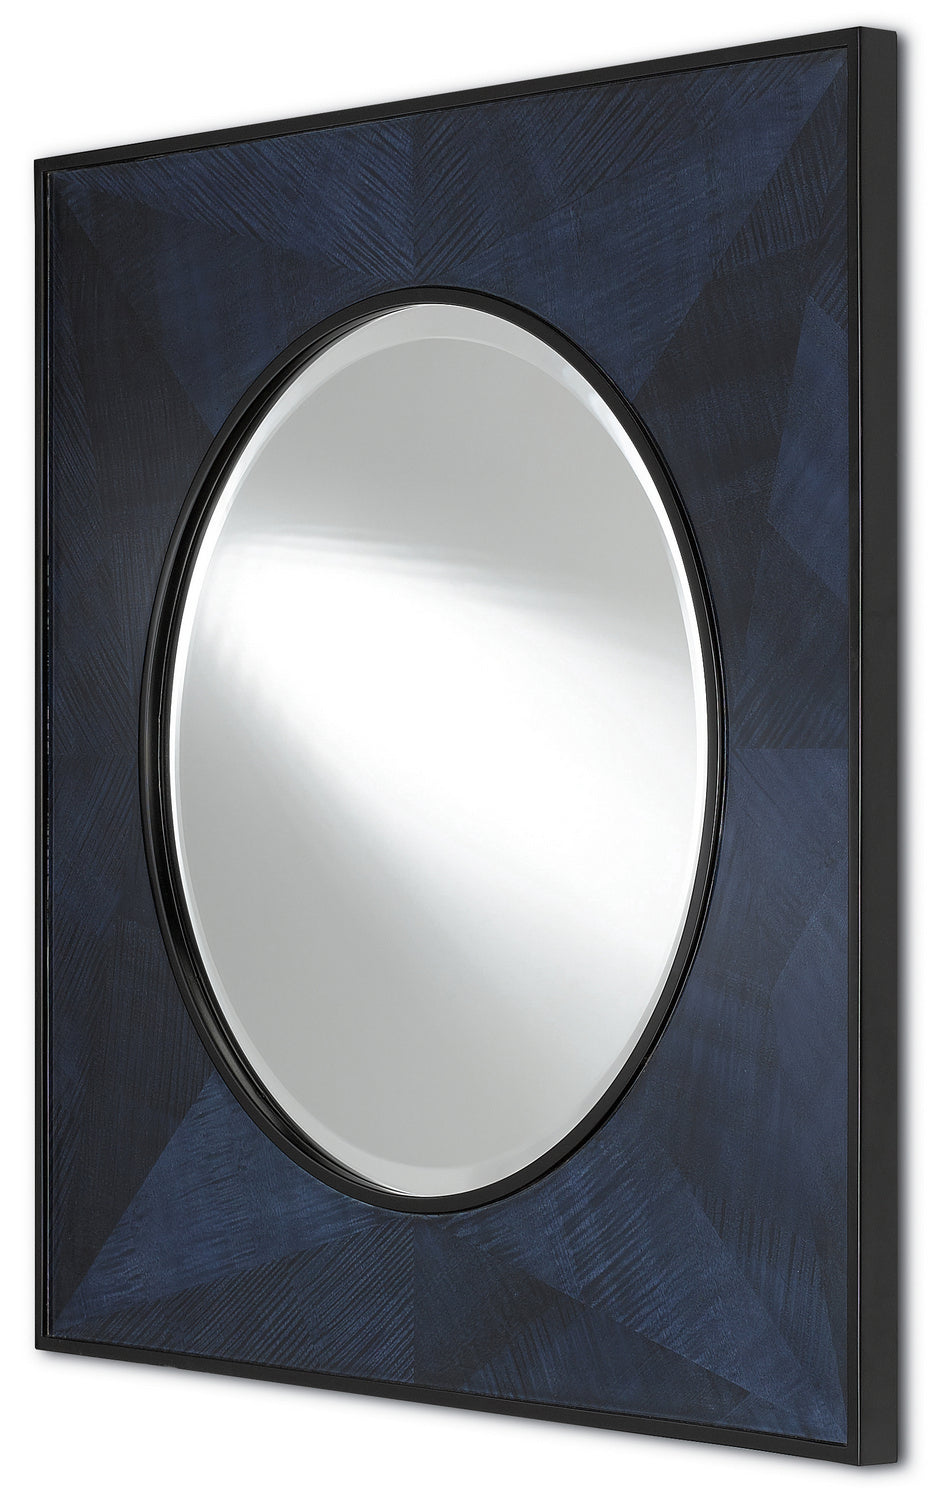 Mirror from the Kallista collection in Dark Sapphire/Caviar Black/Mirror finish